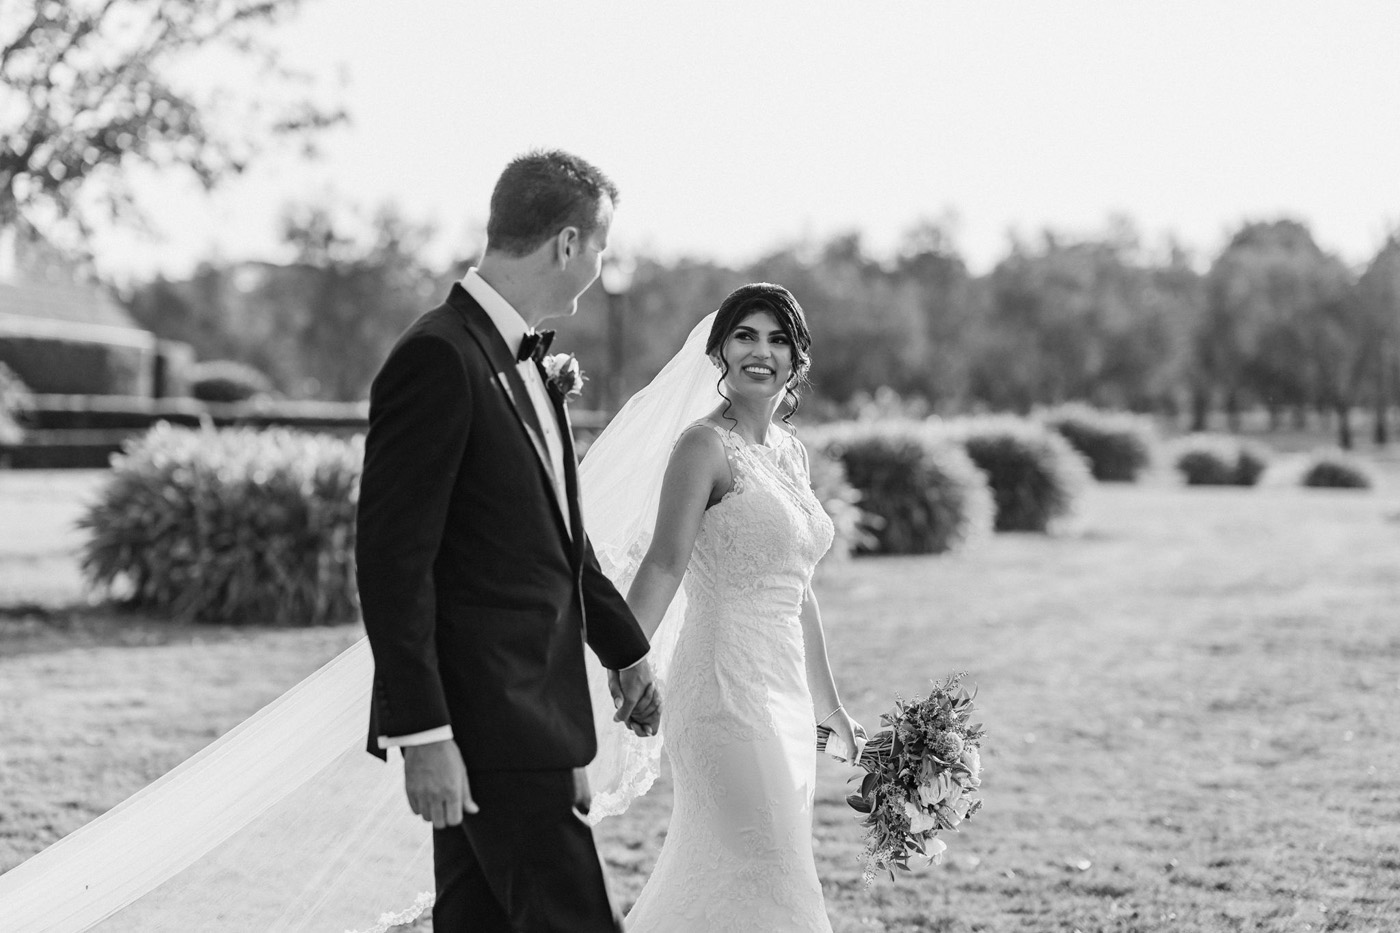 Michelle + David | RC Real Bride | Prunelle by Pronovias | Melbourne Real Bride | Real Wedding